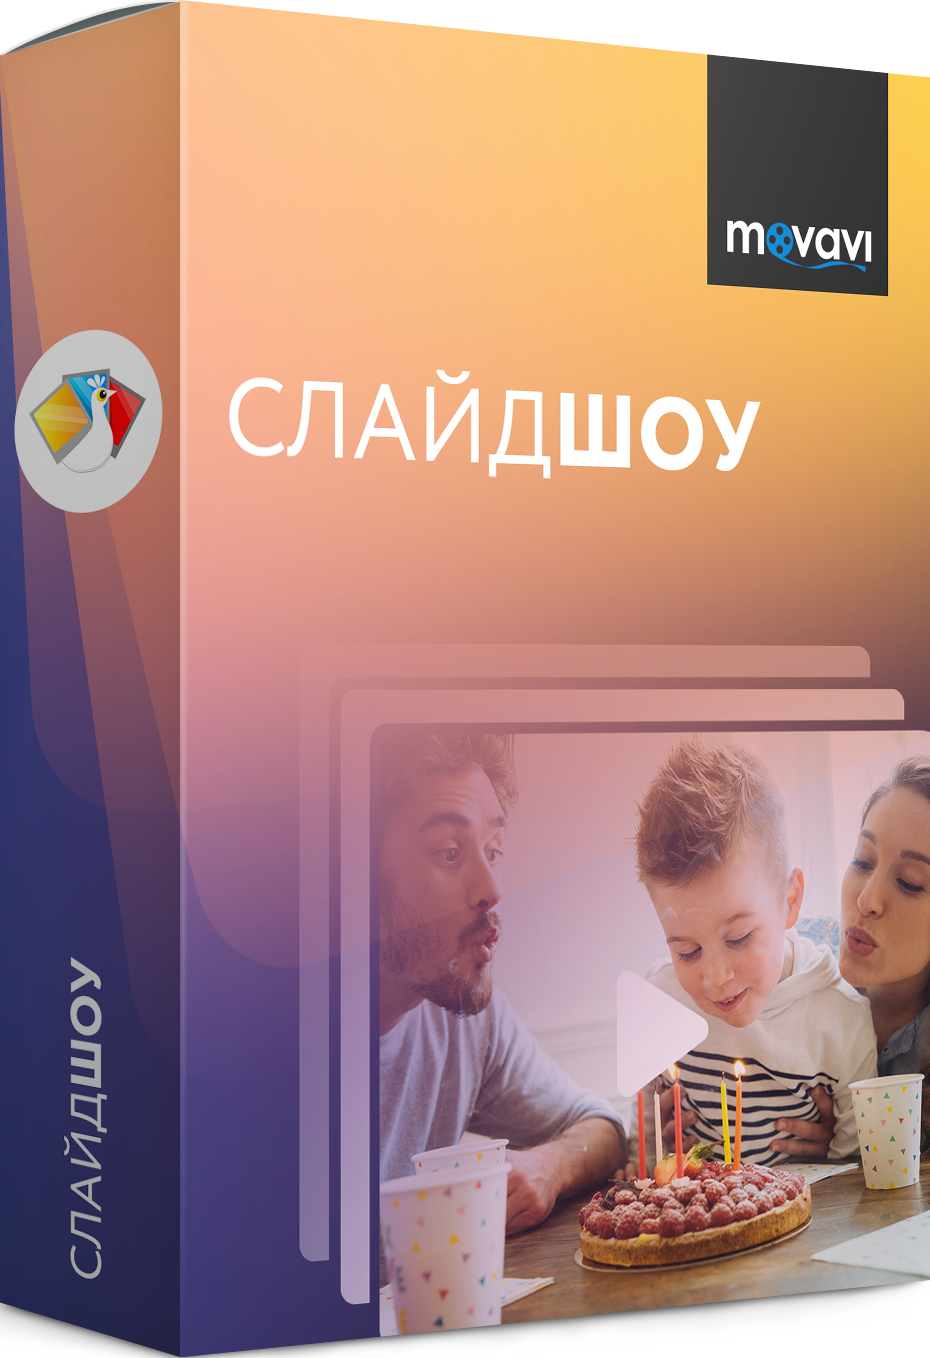 Movavi СлайдШОУ для Mac 4. Бизнес лицензия [MAC, Цифровая версия] (Цифровая версия)